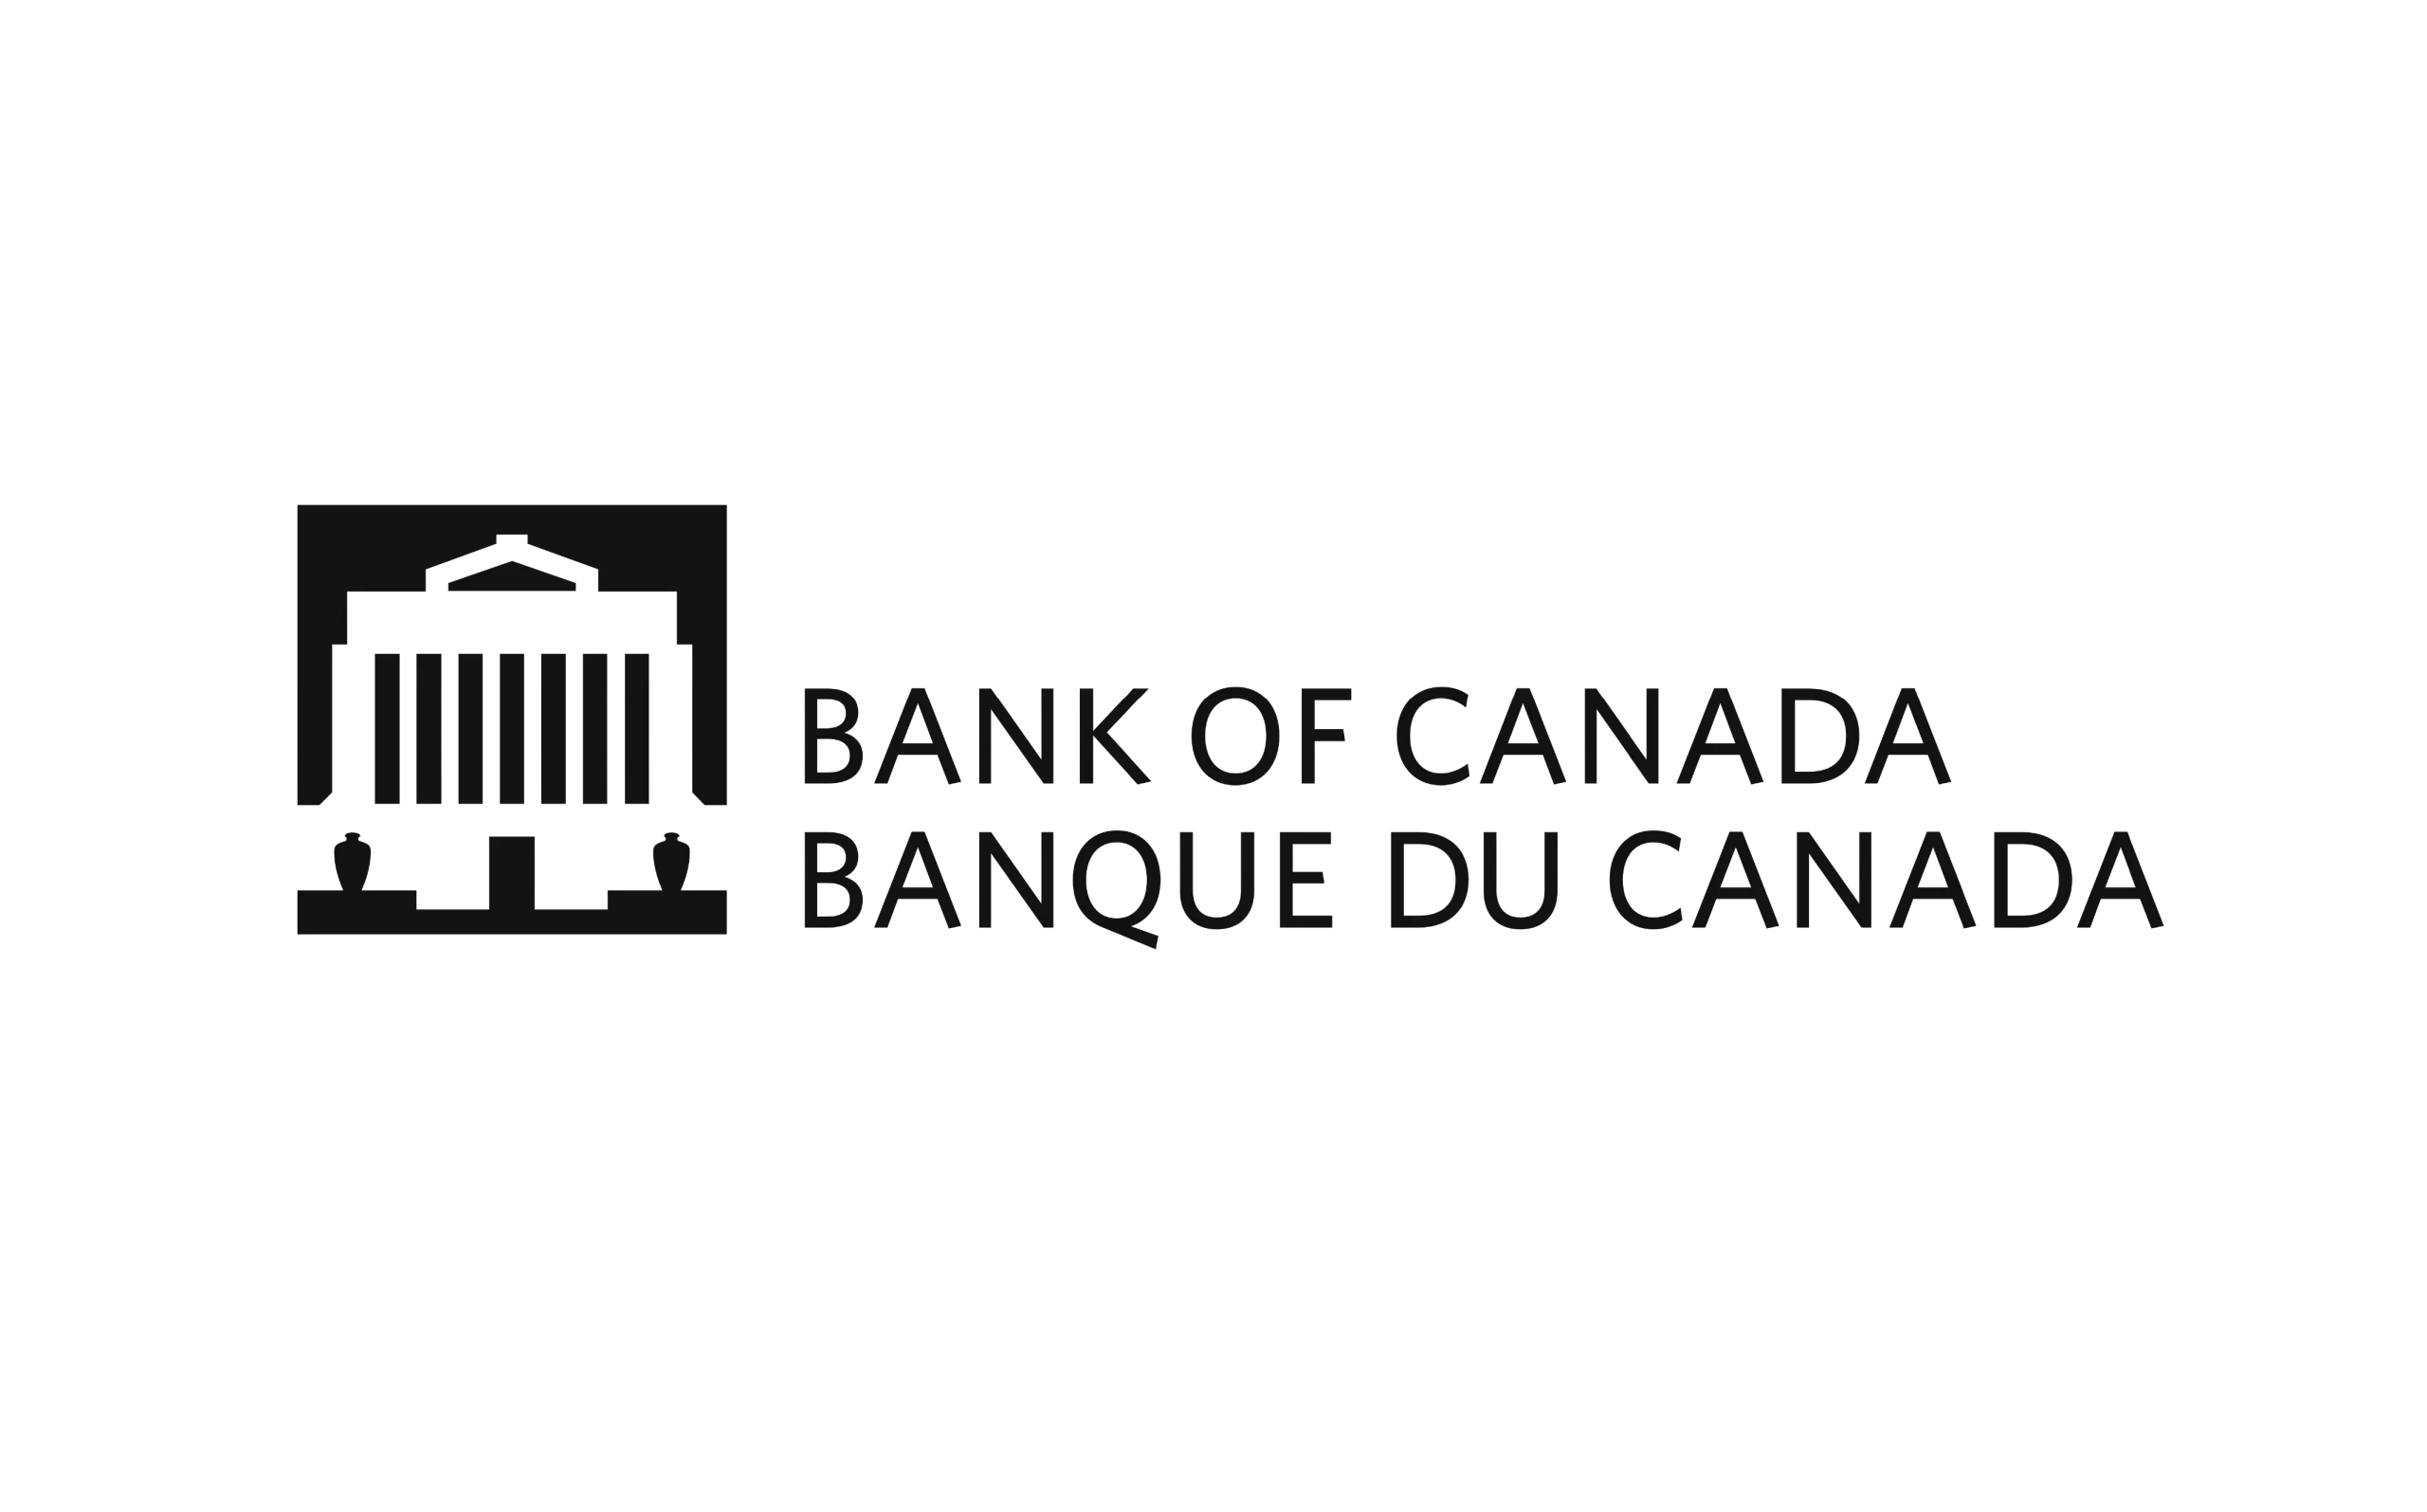 Black Bank of Canada logo